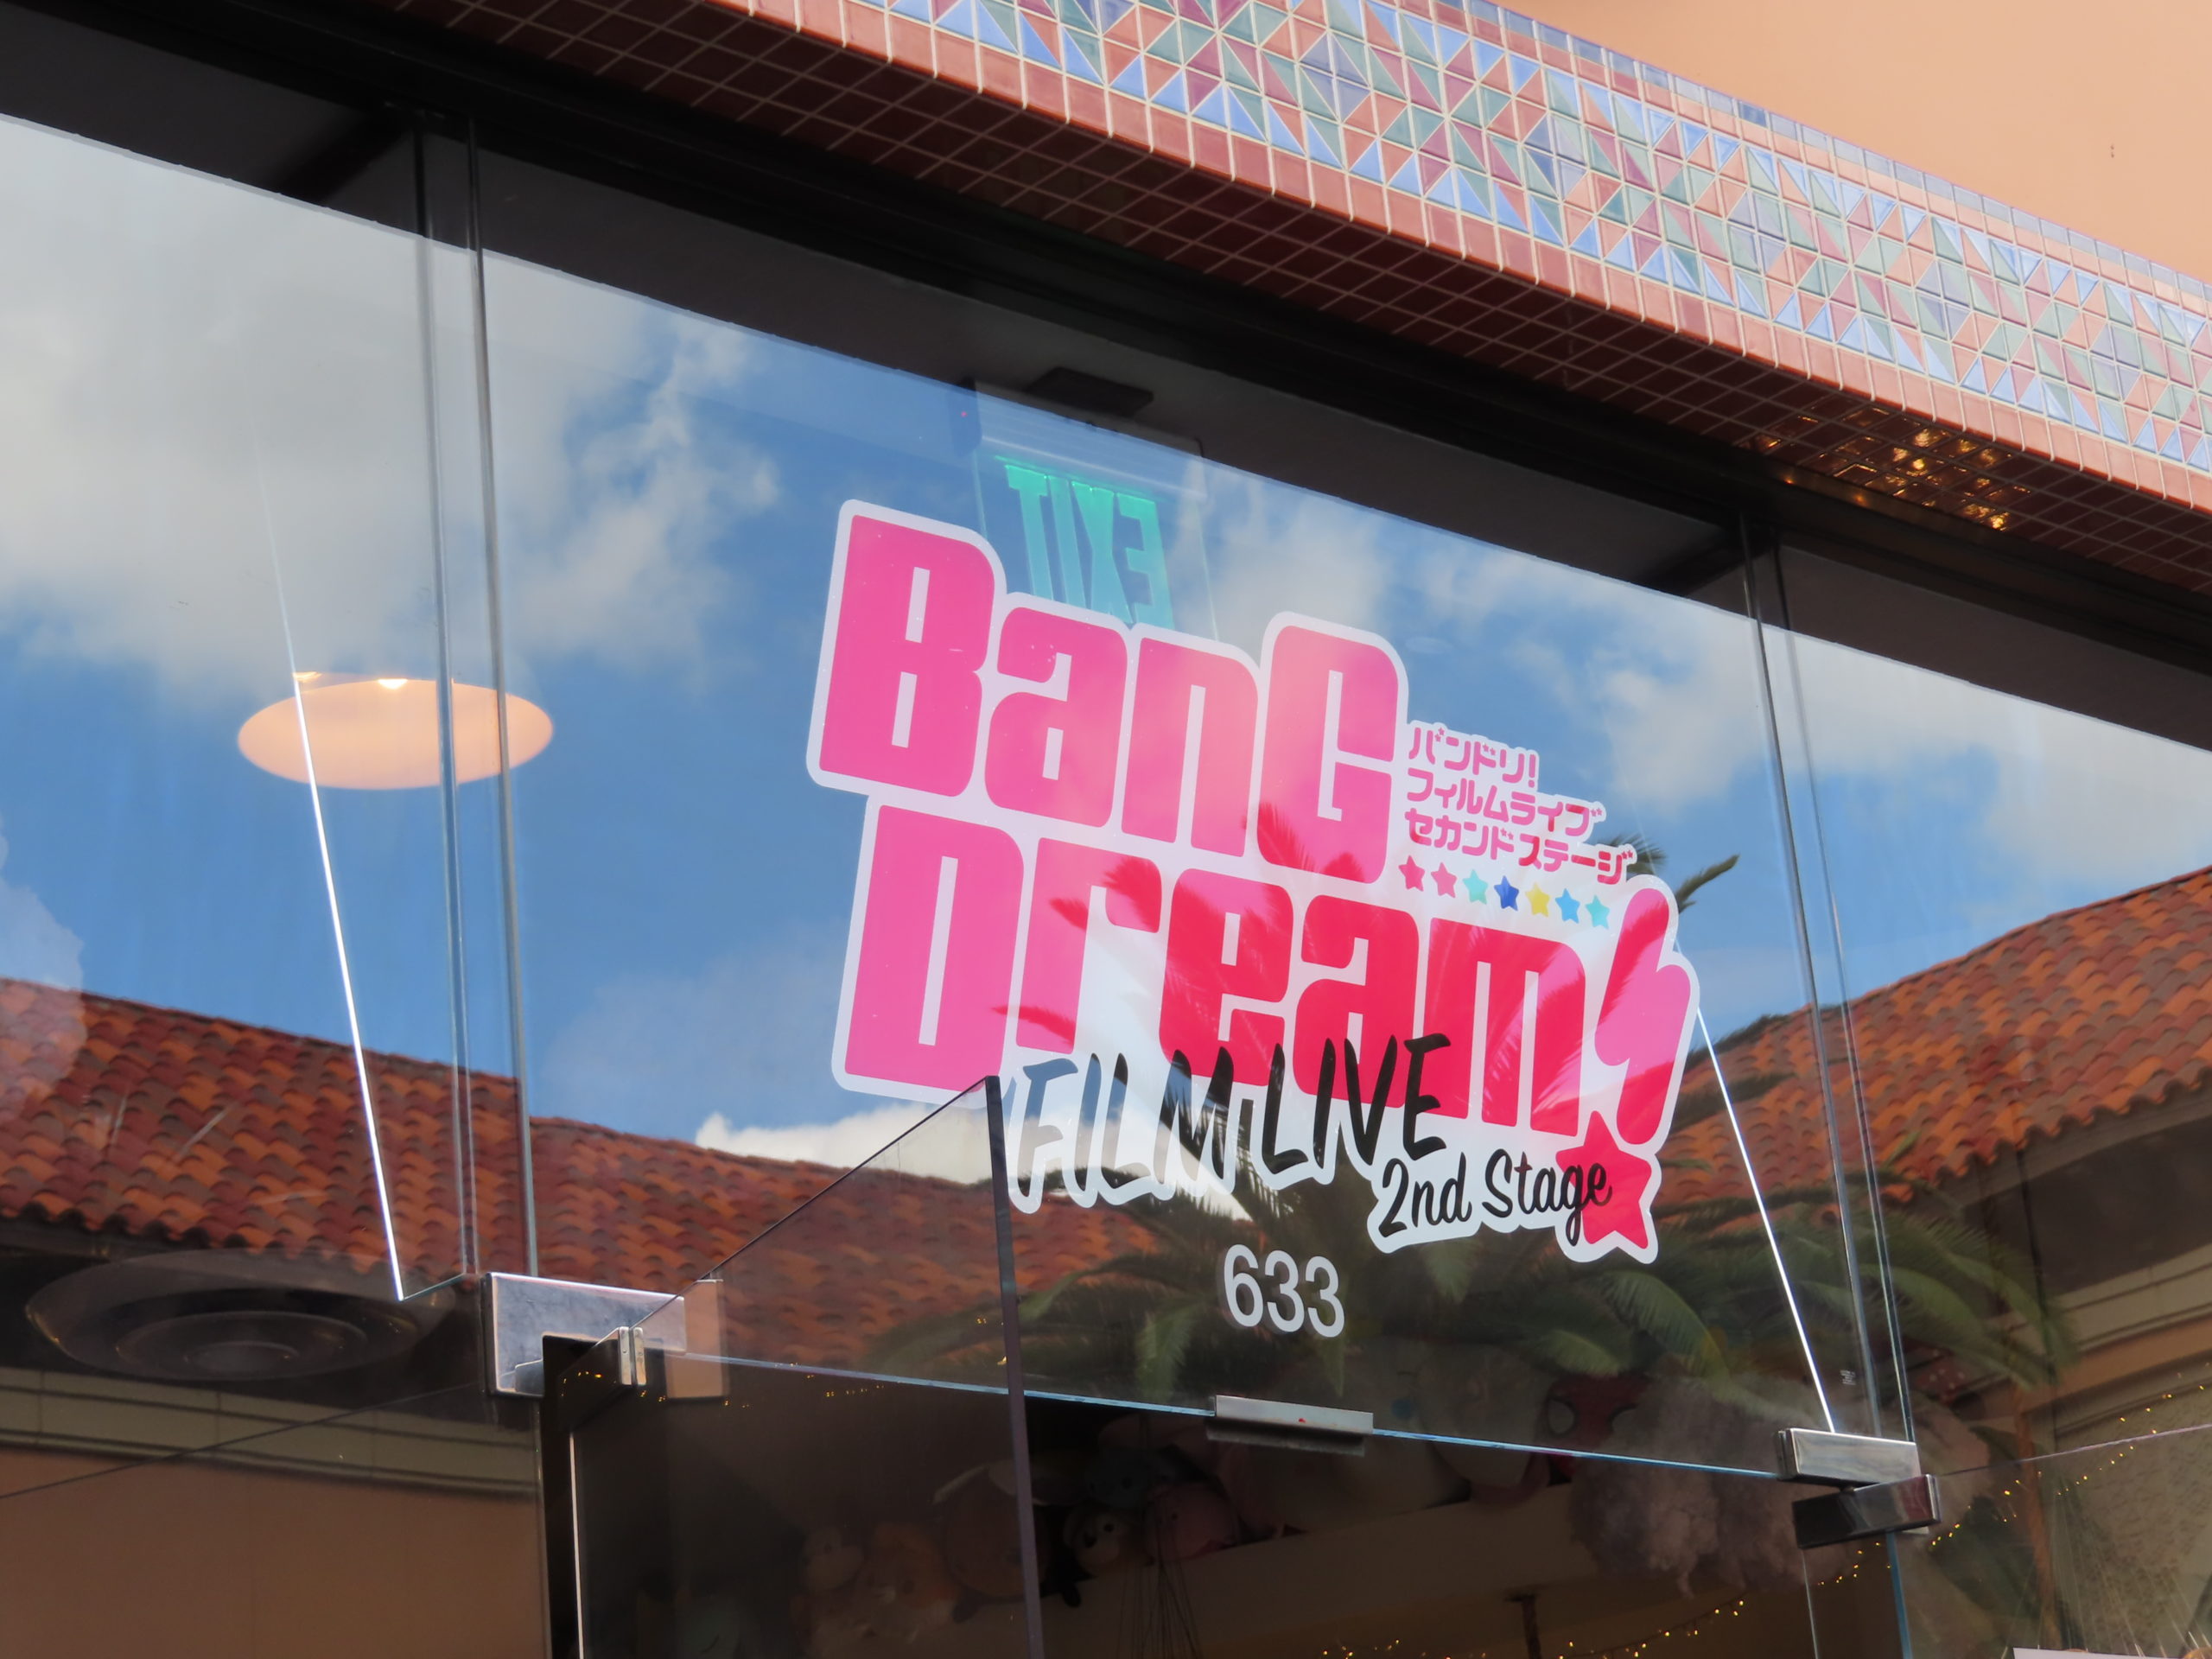 Bang Dream @ Anime Boston 2020